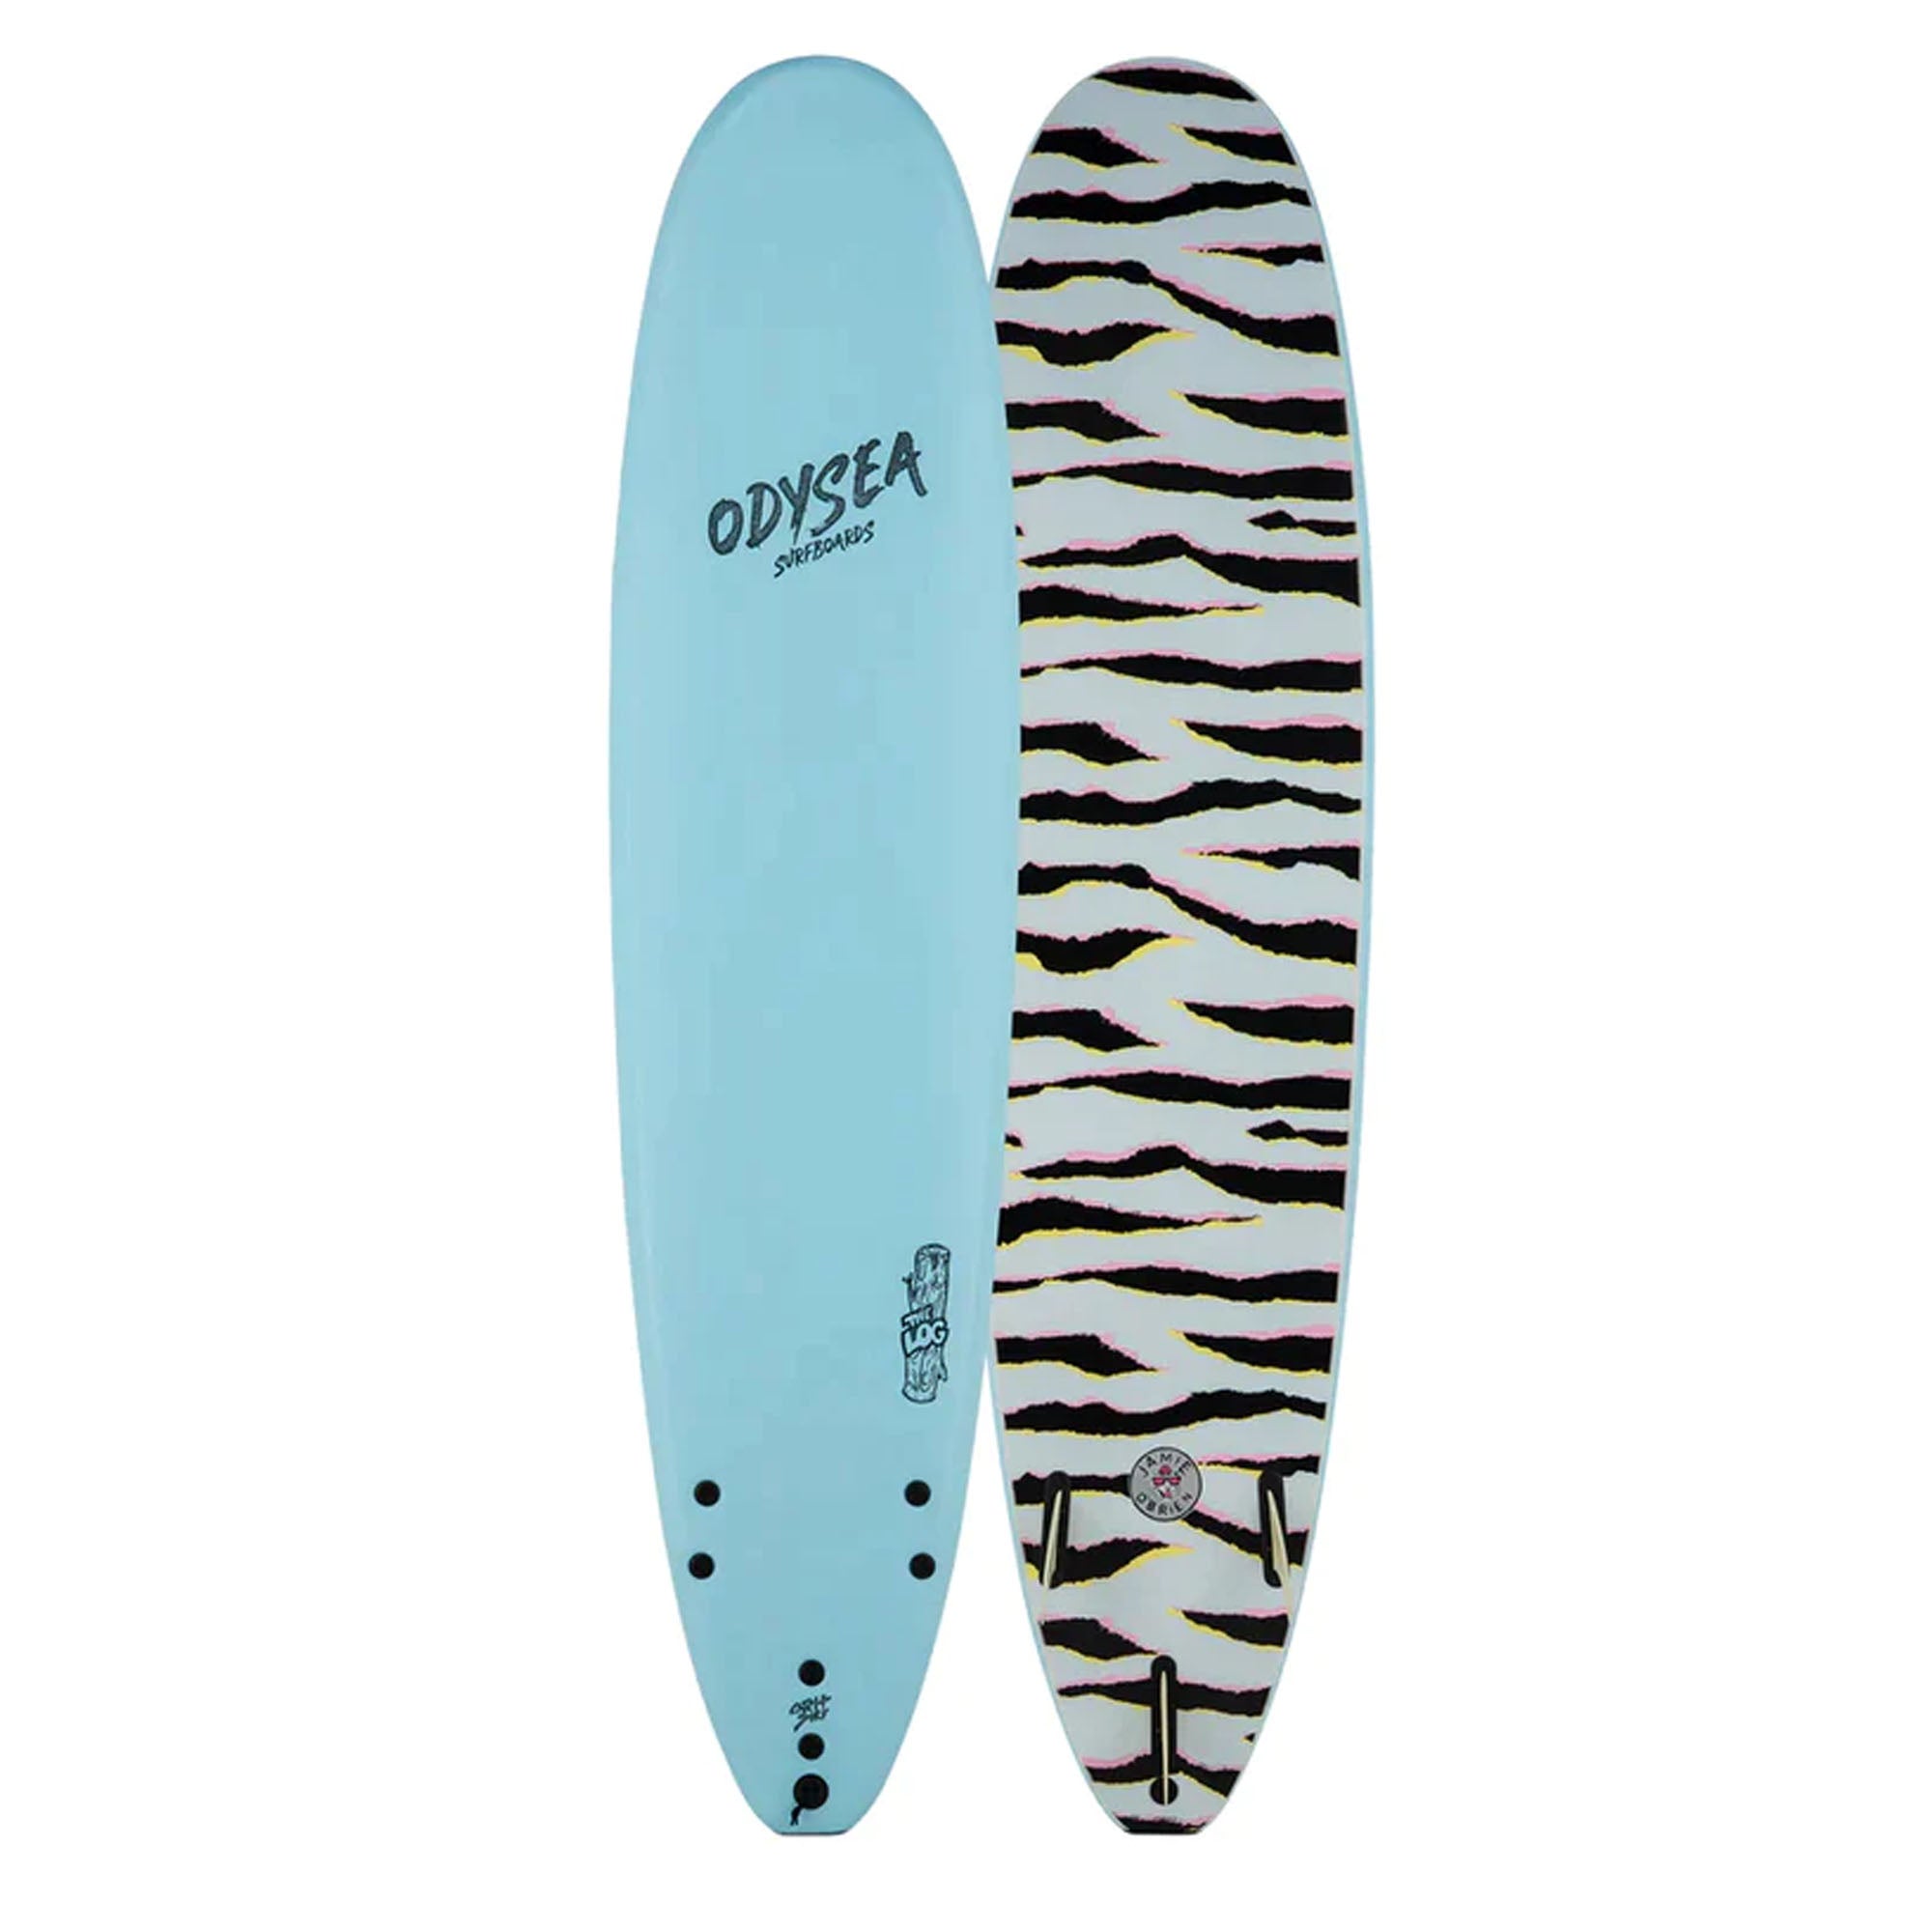 Catch Surf Odysea Log JOB Pro Soft Surfboard